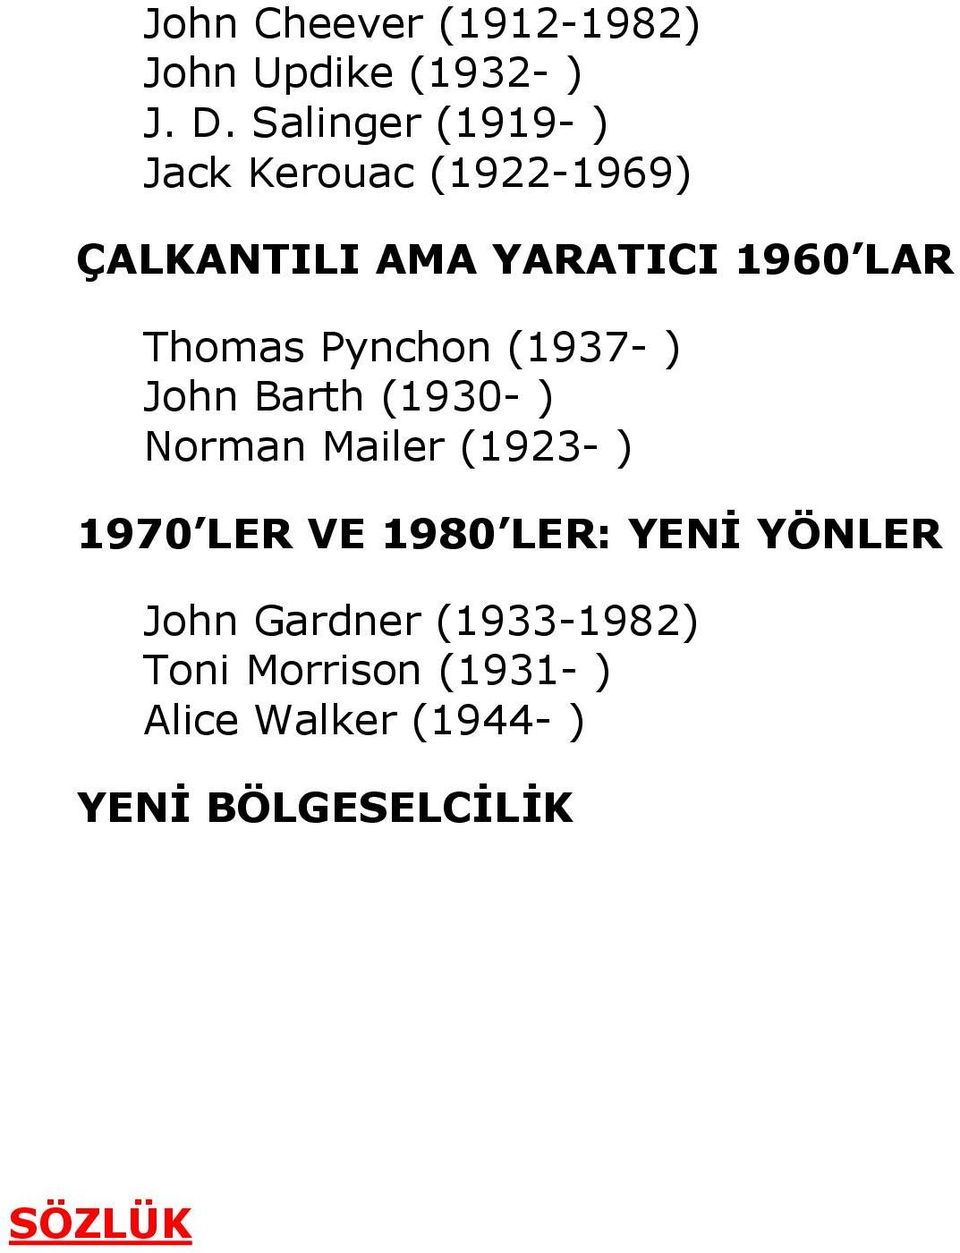 Thomas Pynchon (1937- ) John Barth (1930- ) Norman Mailer (1923- ) 1970 LER VE